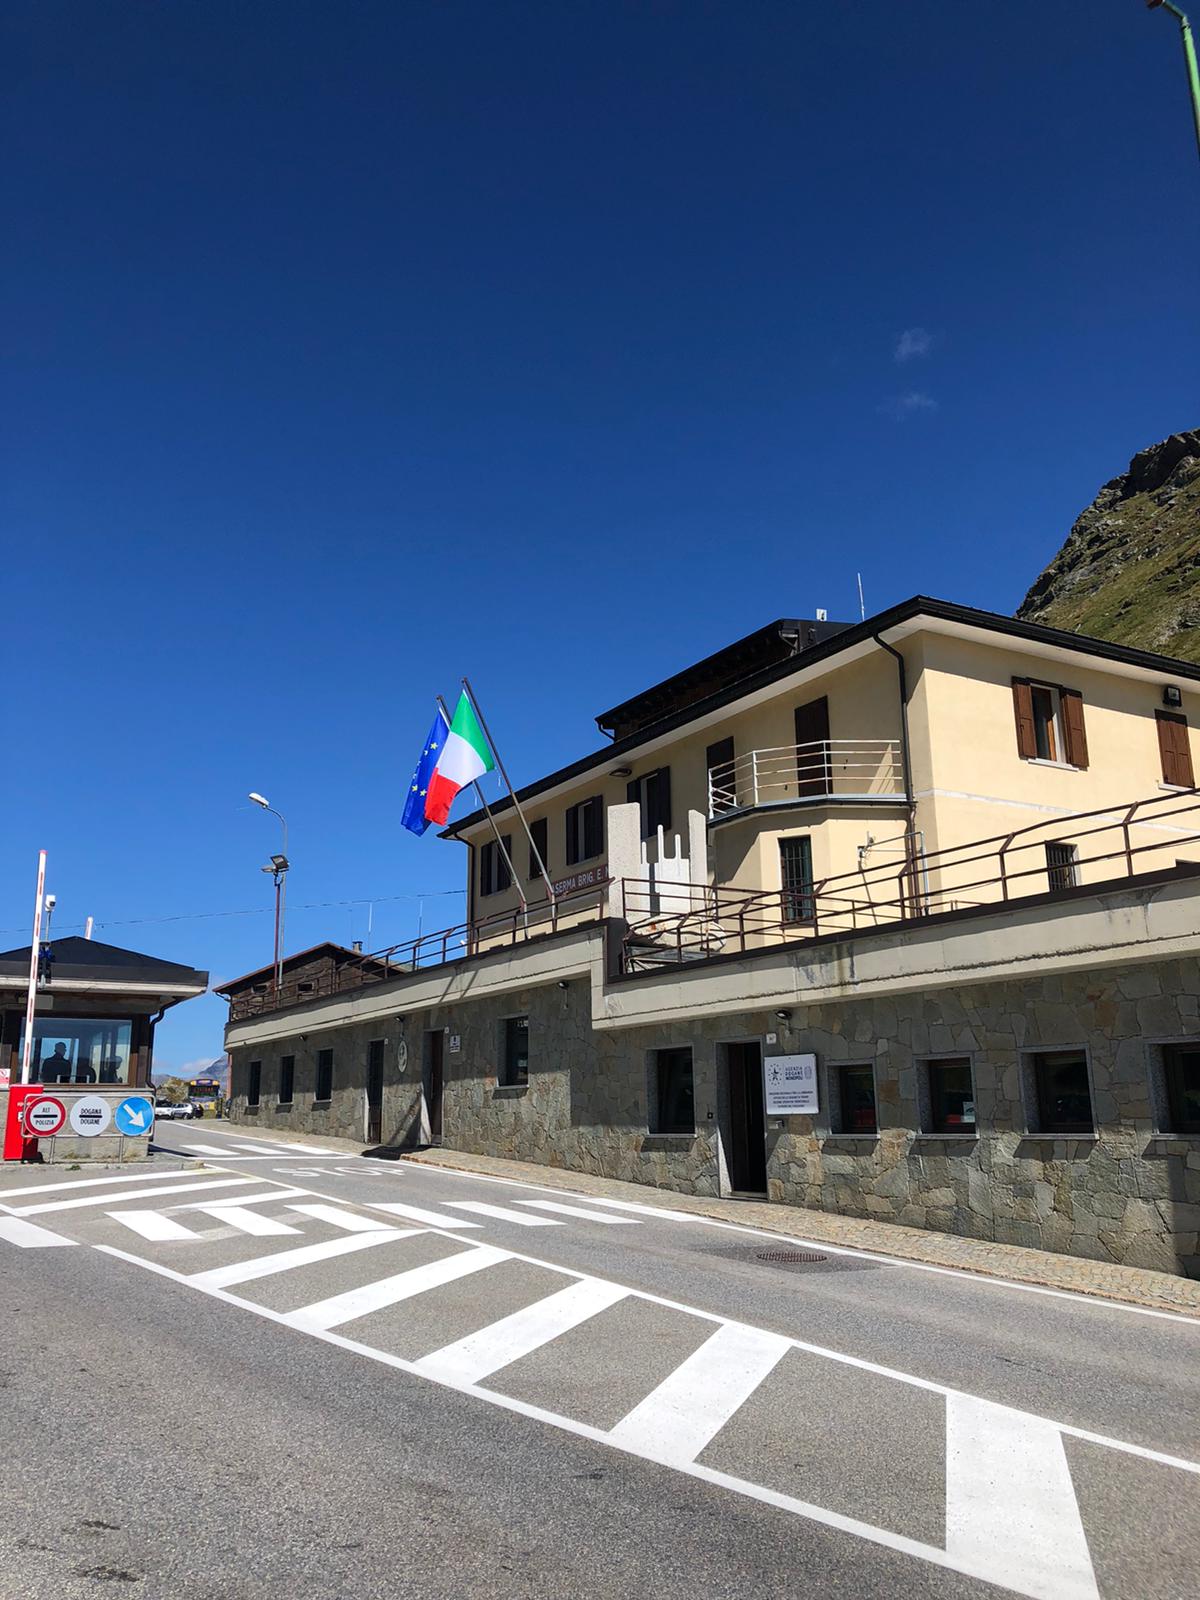 The Swiss-Italian border